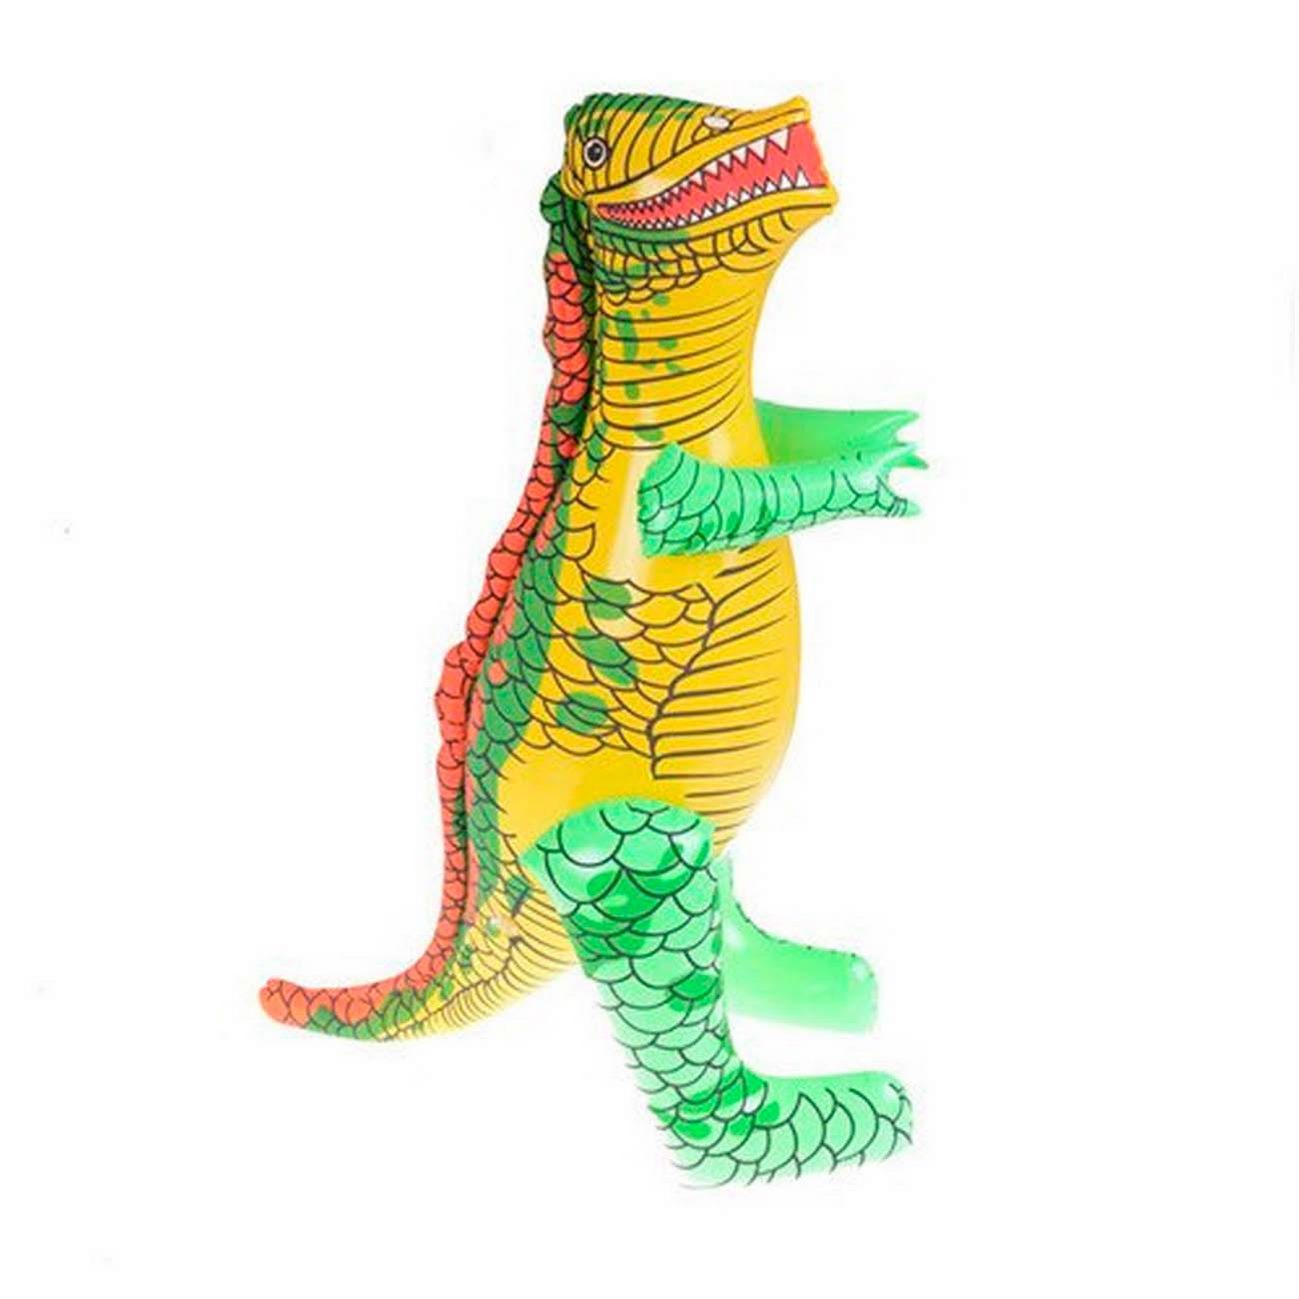 Dragon Dinosaurio Tiranosaurio Rex Inflable Niños Juguete 